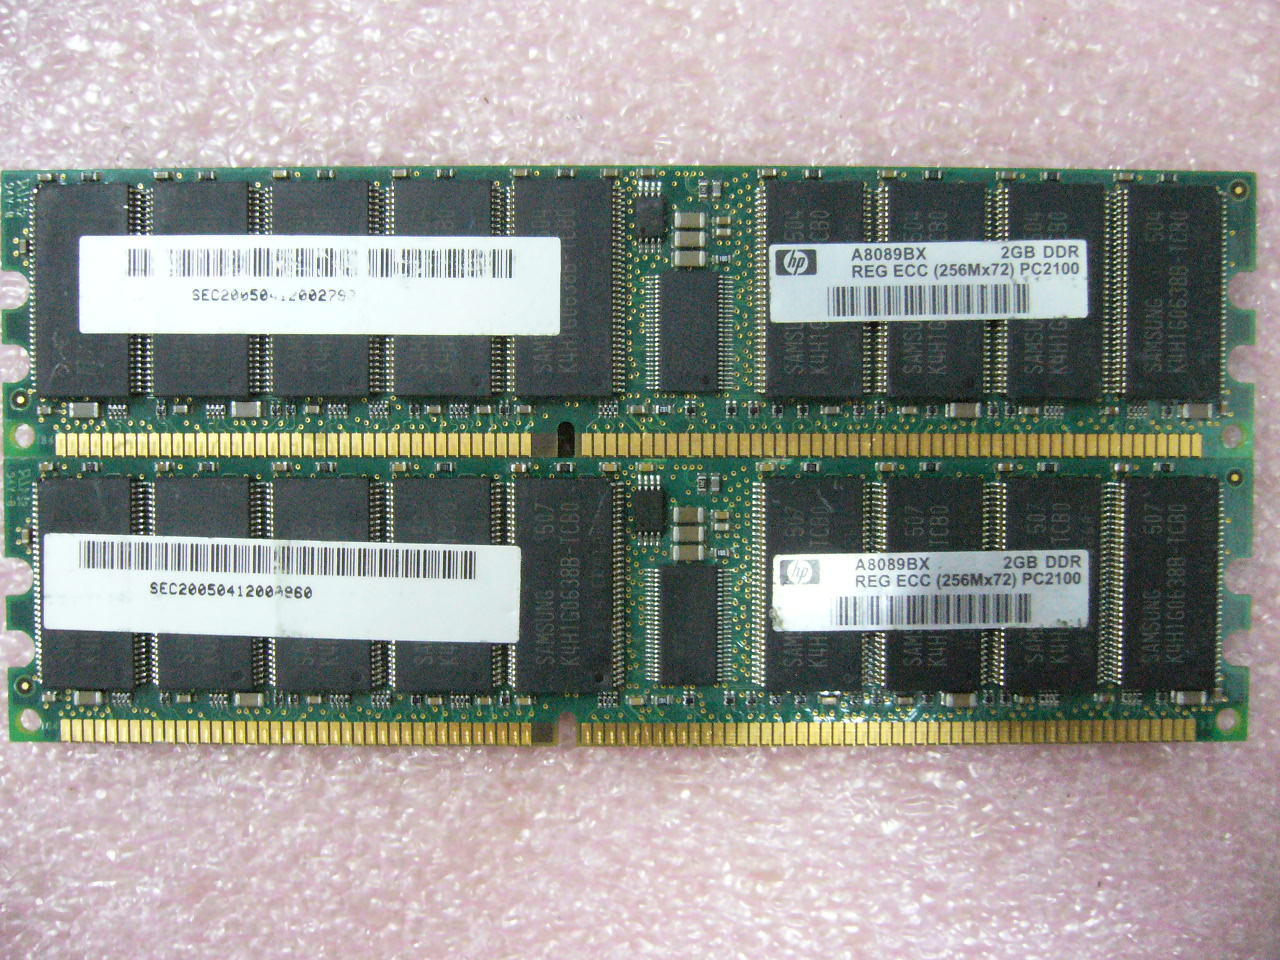 1x 2GB DDR 266 PC-2100R ECC Registered Server memory HP PN A8089BX